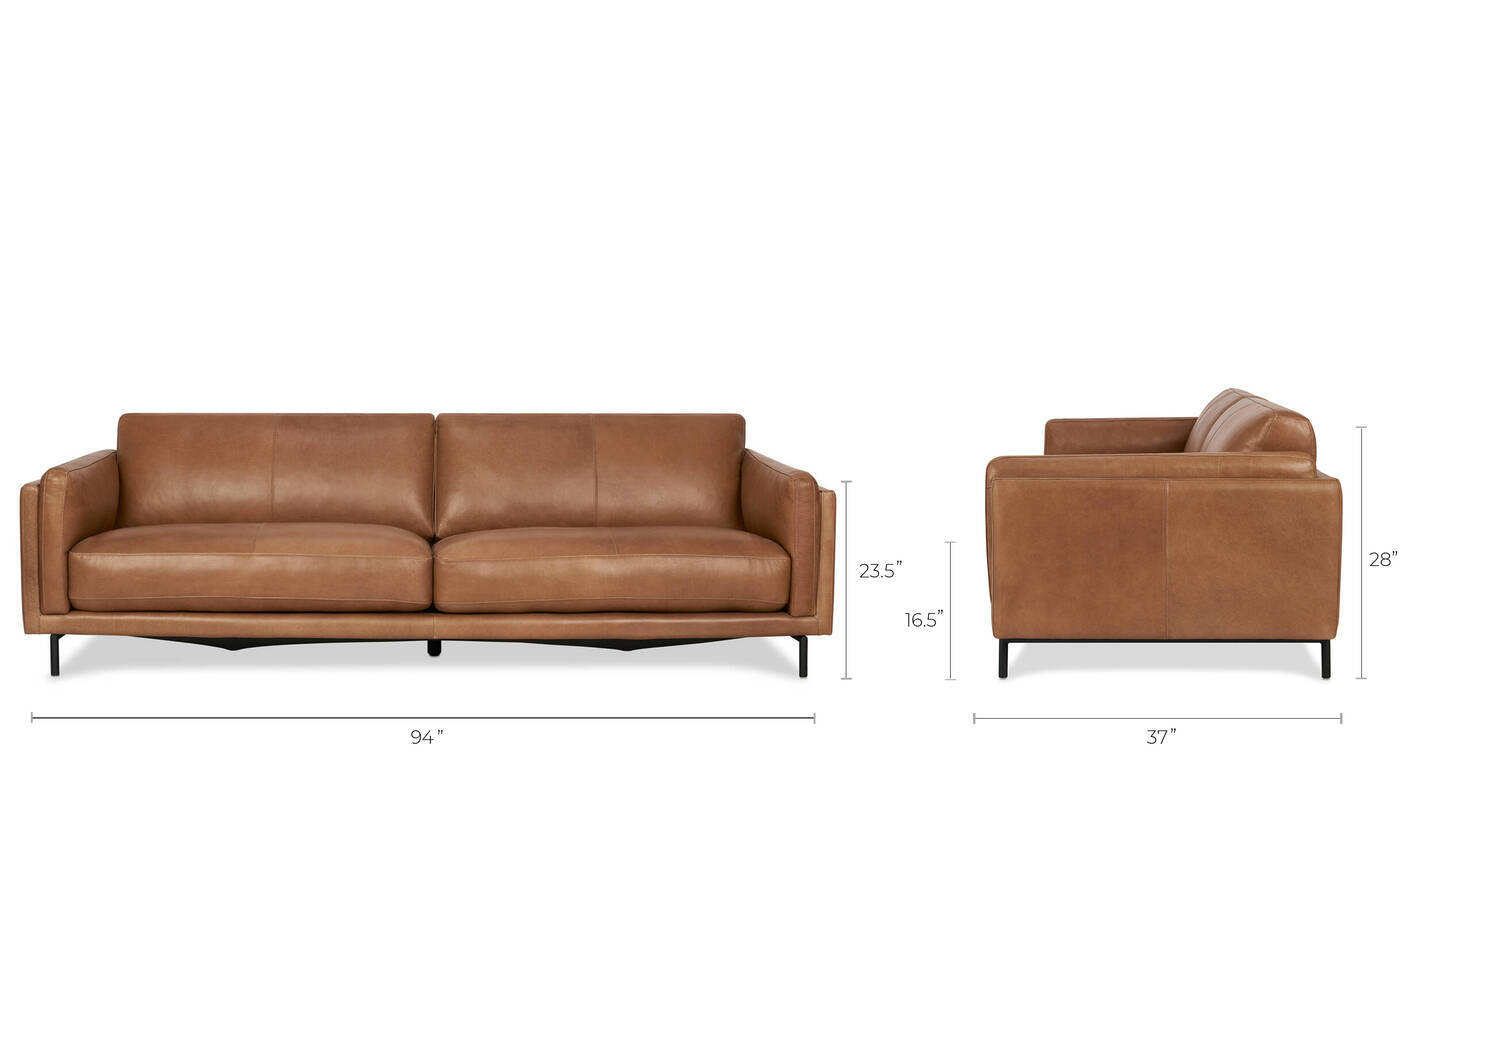 Renfrew Leather Sofa 94" -Adler Tan